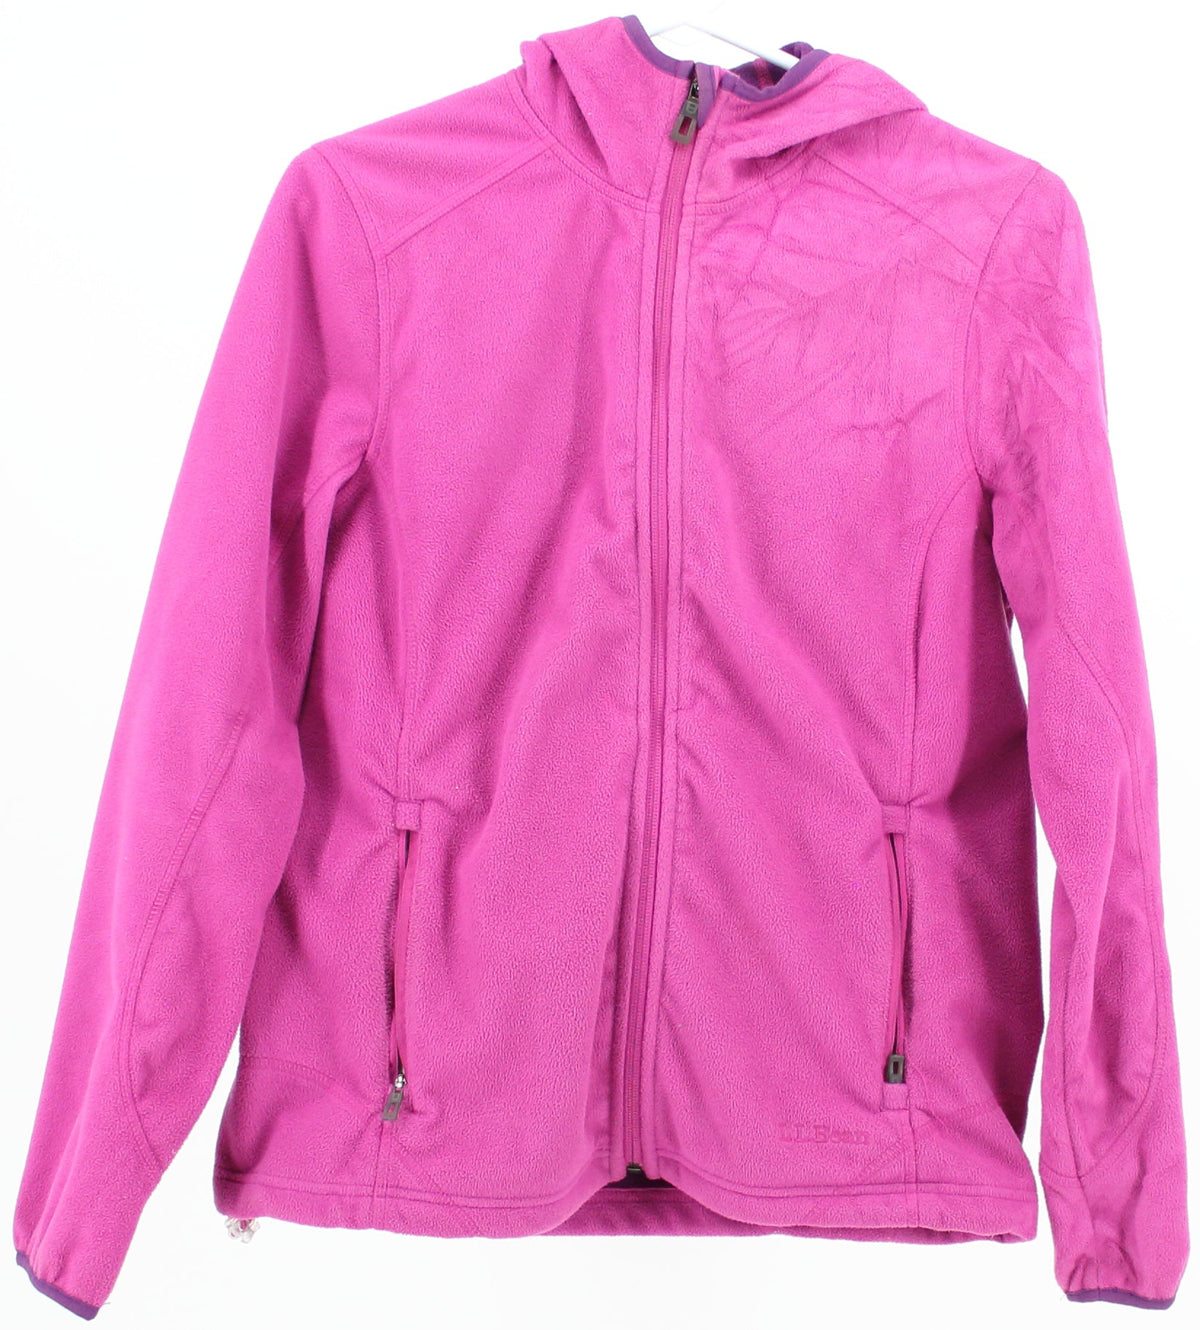 L.L.Bean Pink and Purple Hooded Fleece Jacket